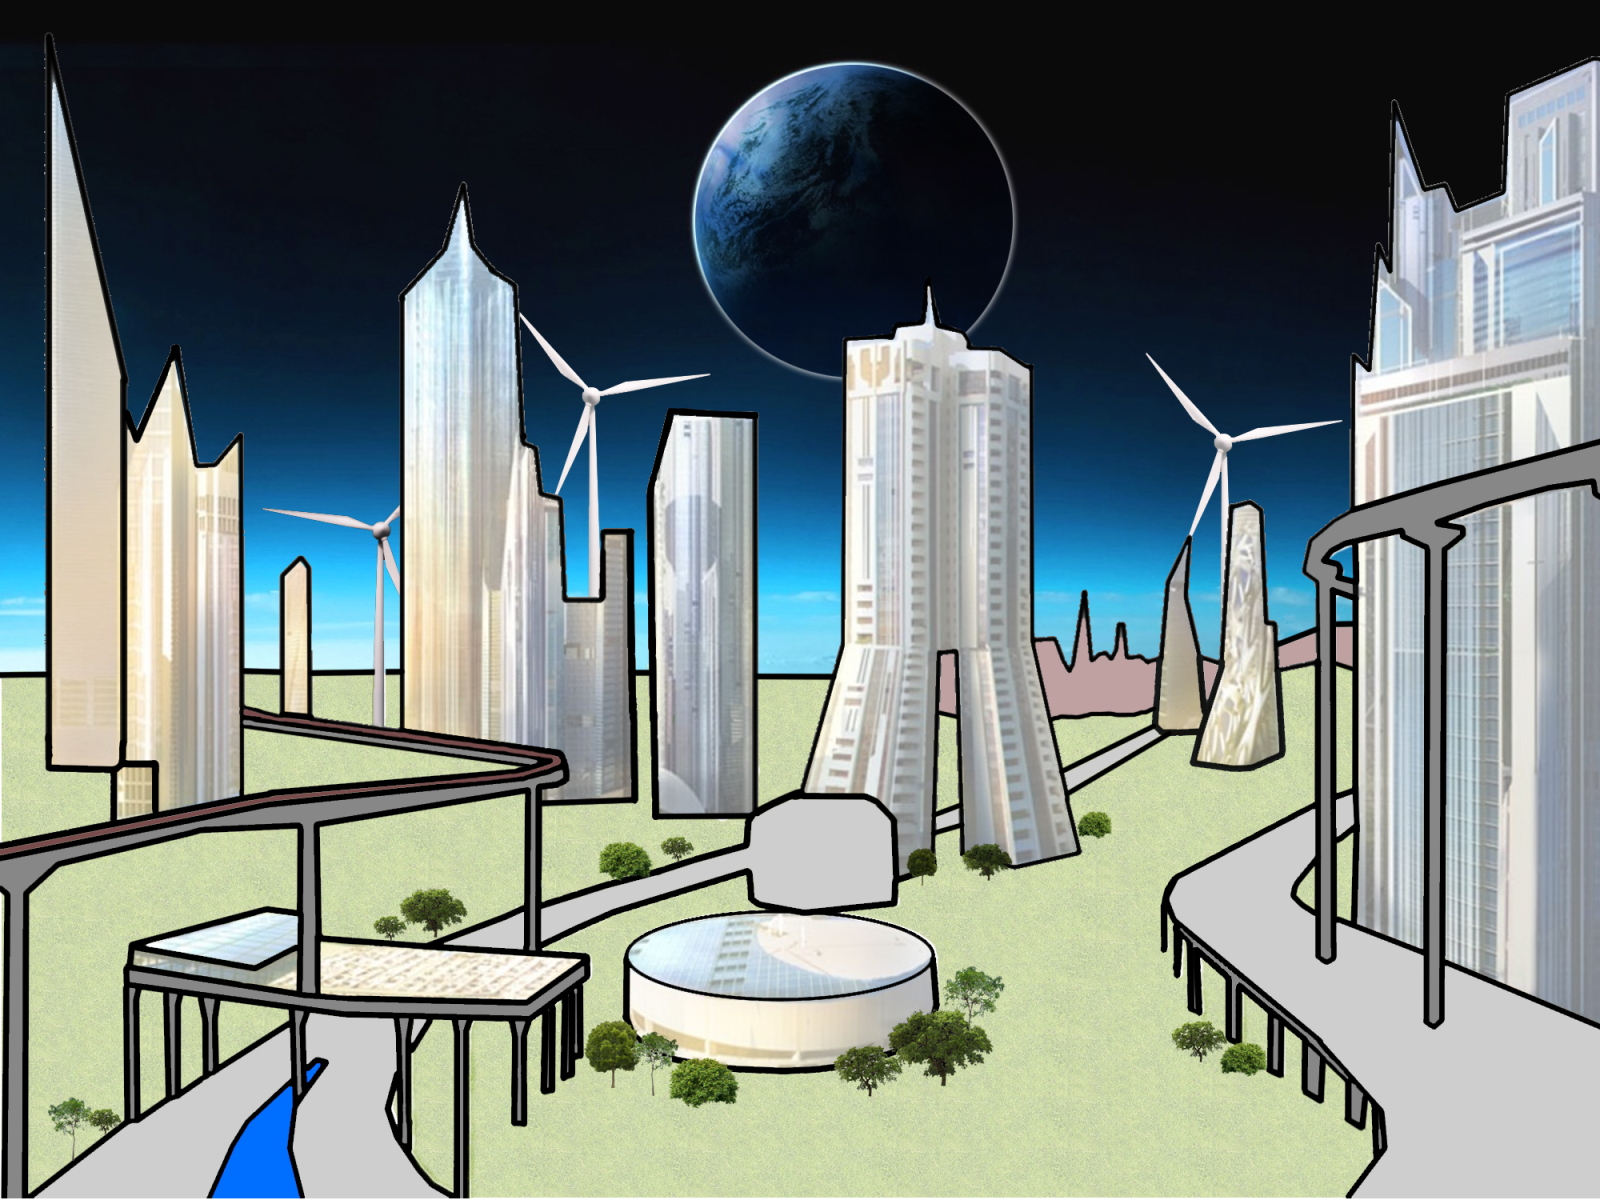 Futuristic city concept by ChilledPod on DeviantArt